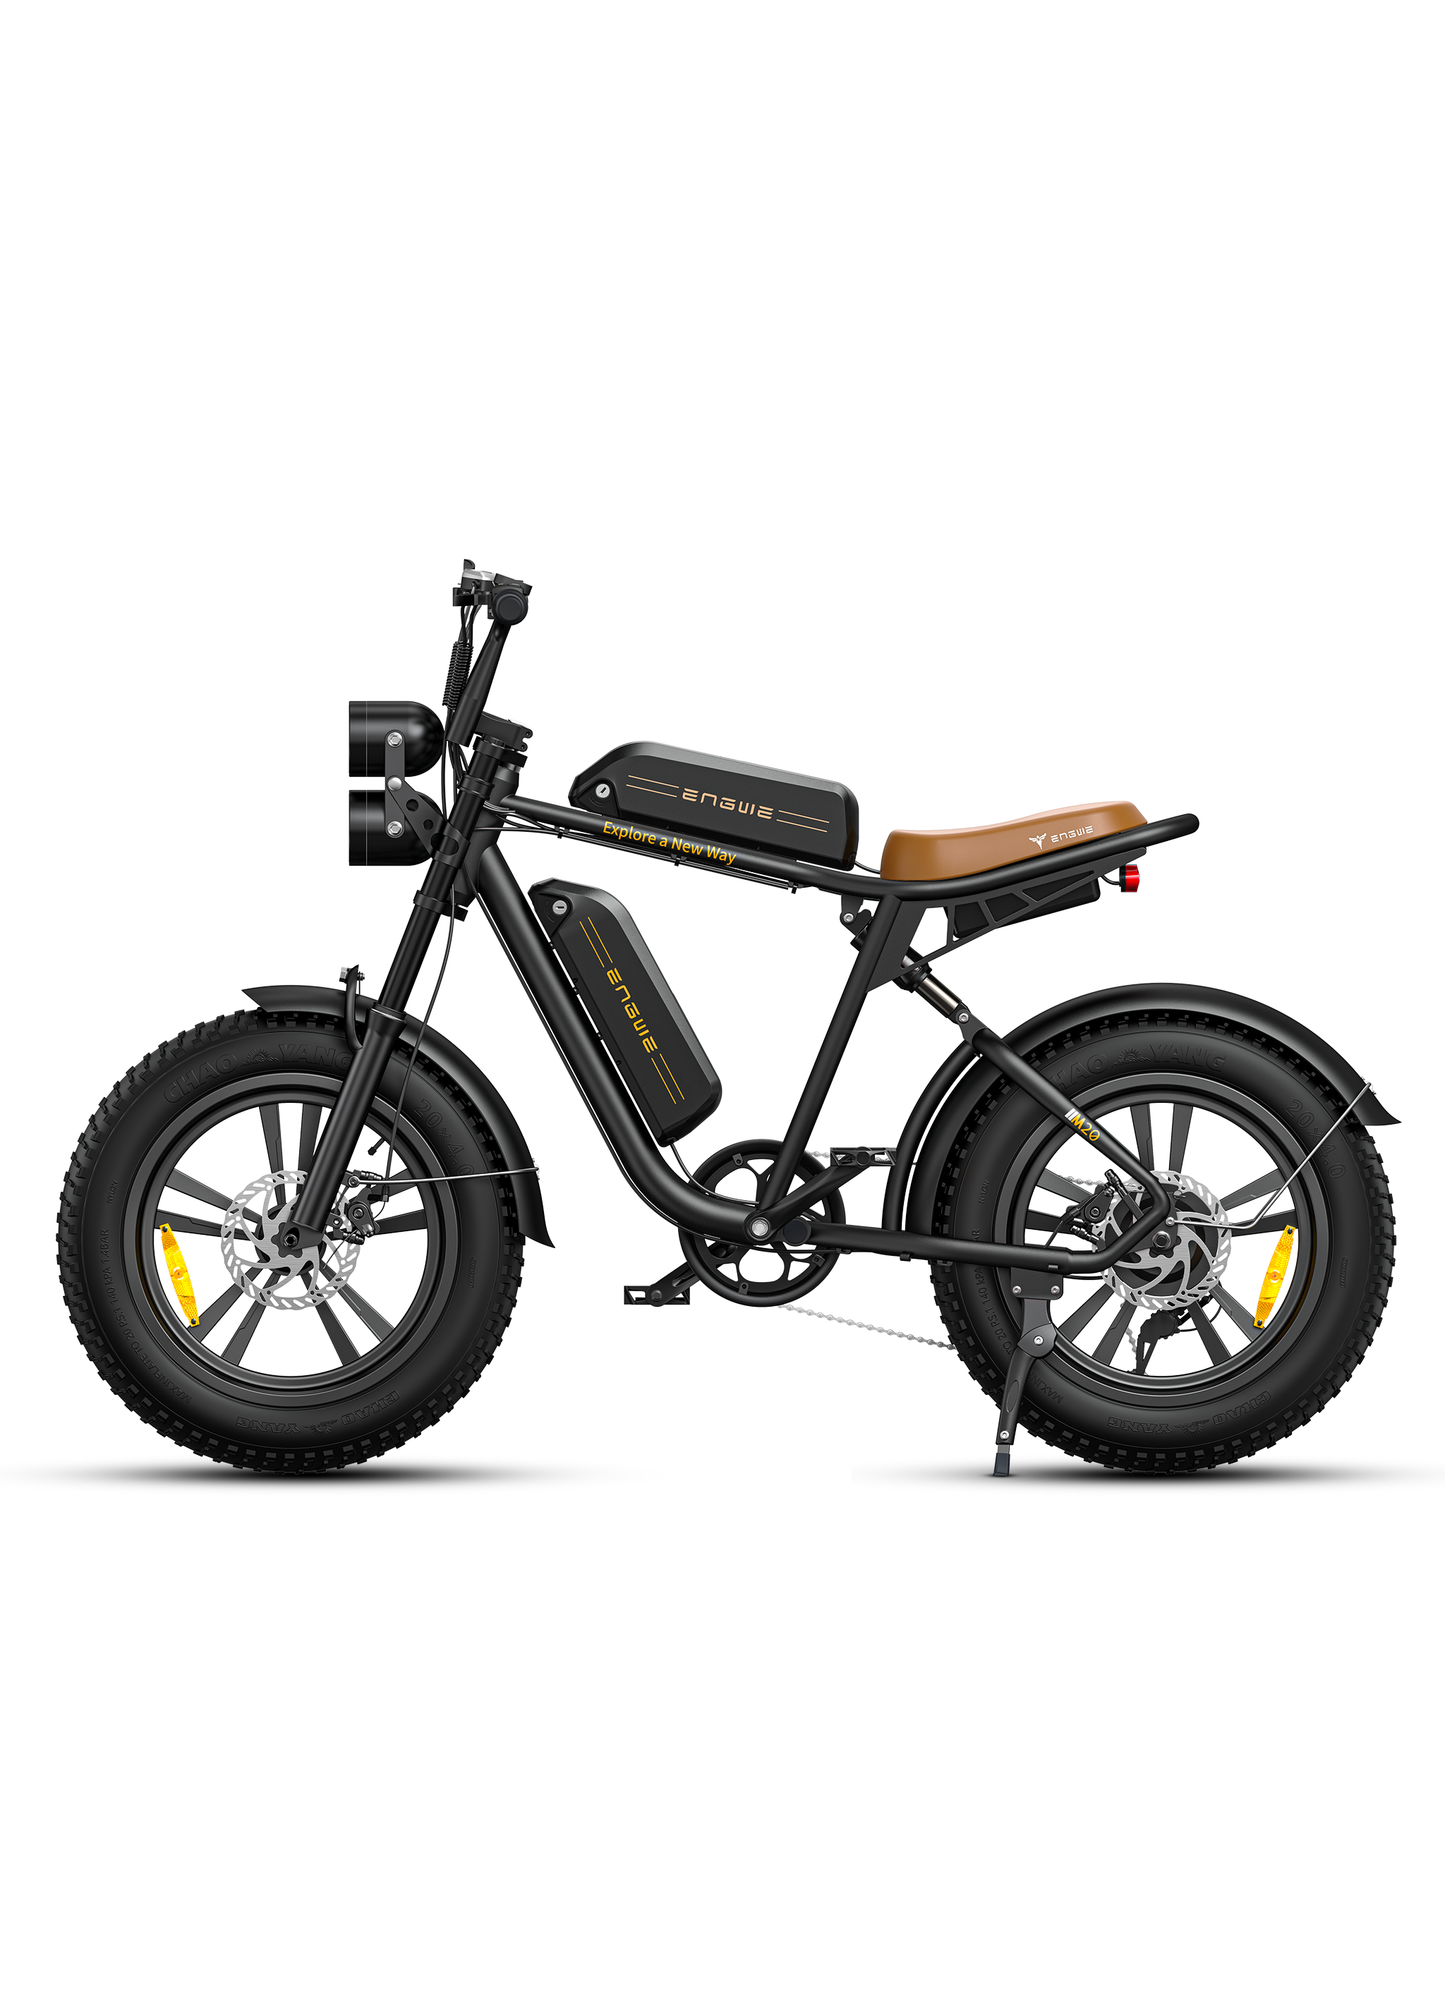 ENGWE M20 1000W Electric Fat Bike 20 * 4.0 '' Fat Pneus 48V Shimano 7 vitesses